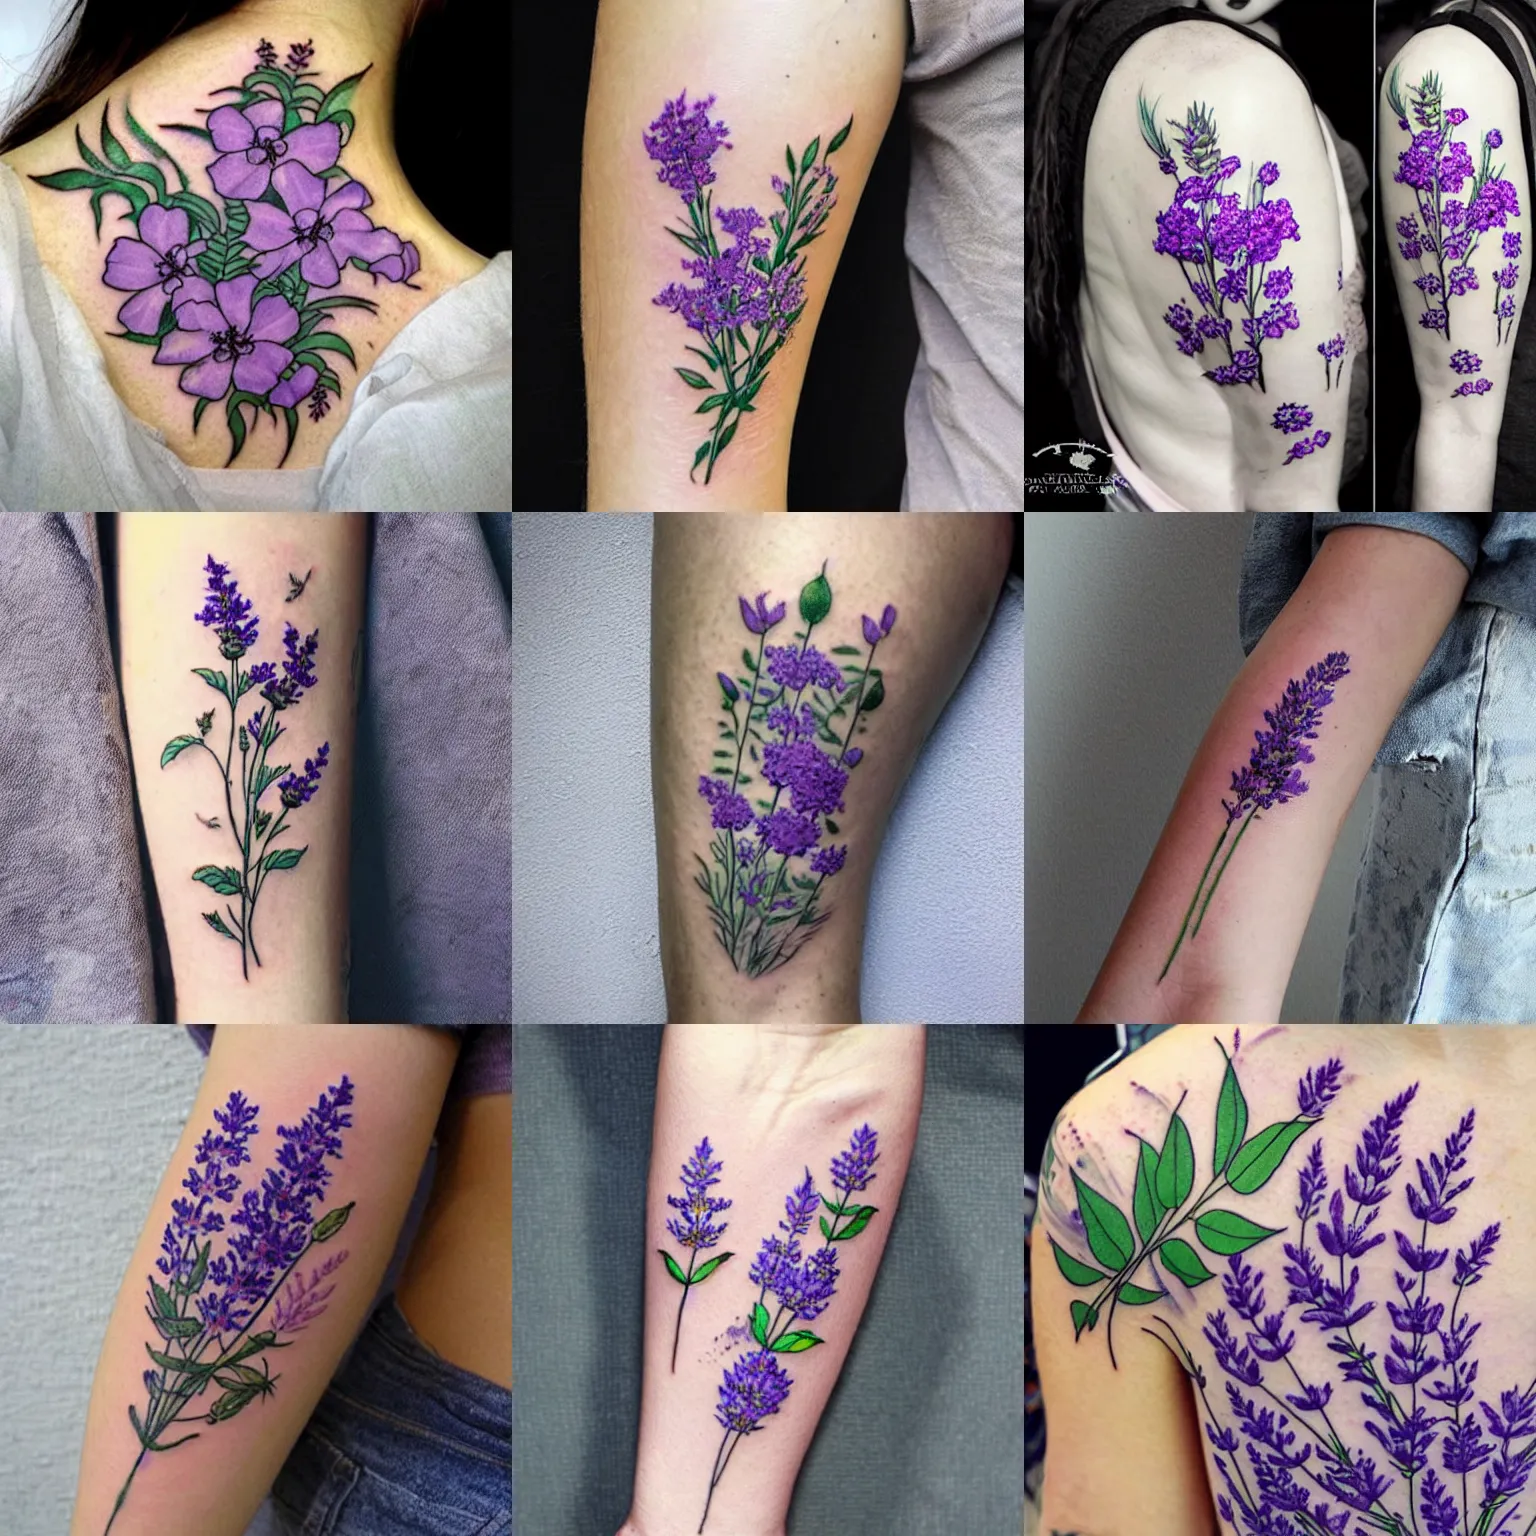 Prompt: botanical tattoo design of verbena and lavender flowers, inking on skin, art by studio ghibli